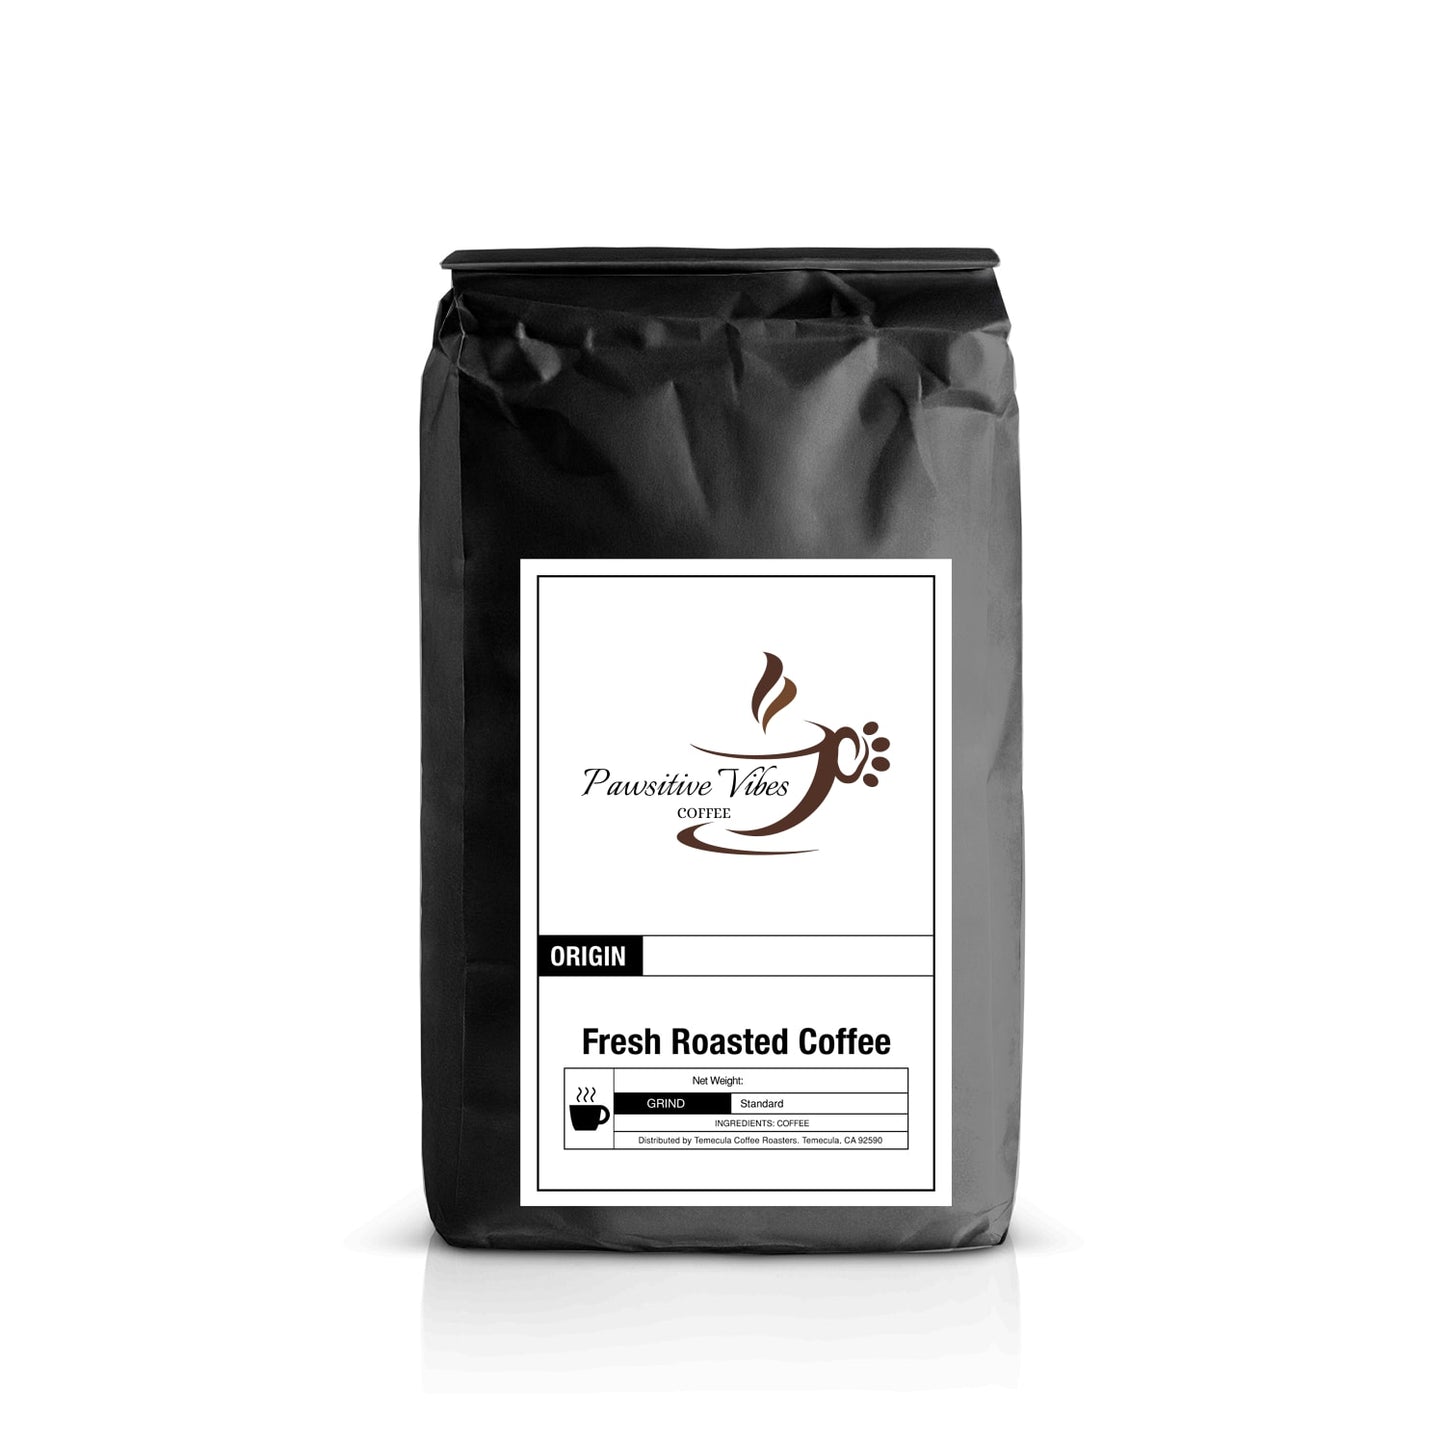 Premium Max Caf Blend Coffee - Perfect Aroma & Flavor